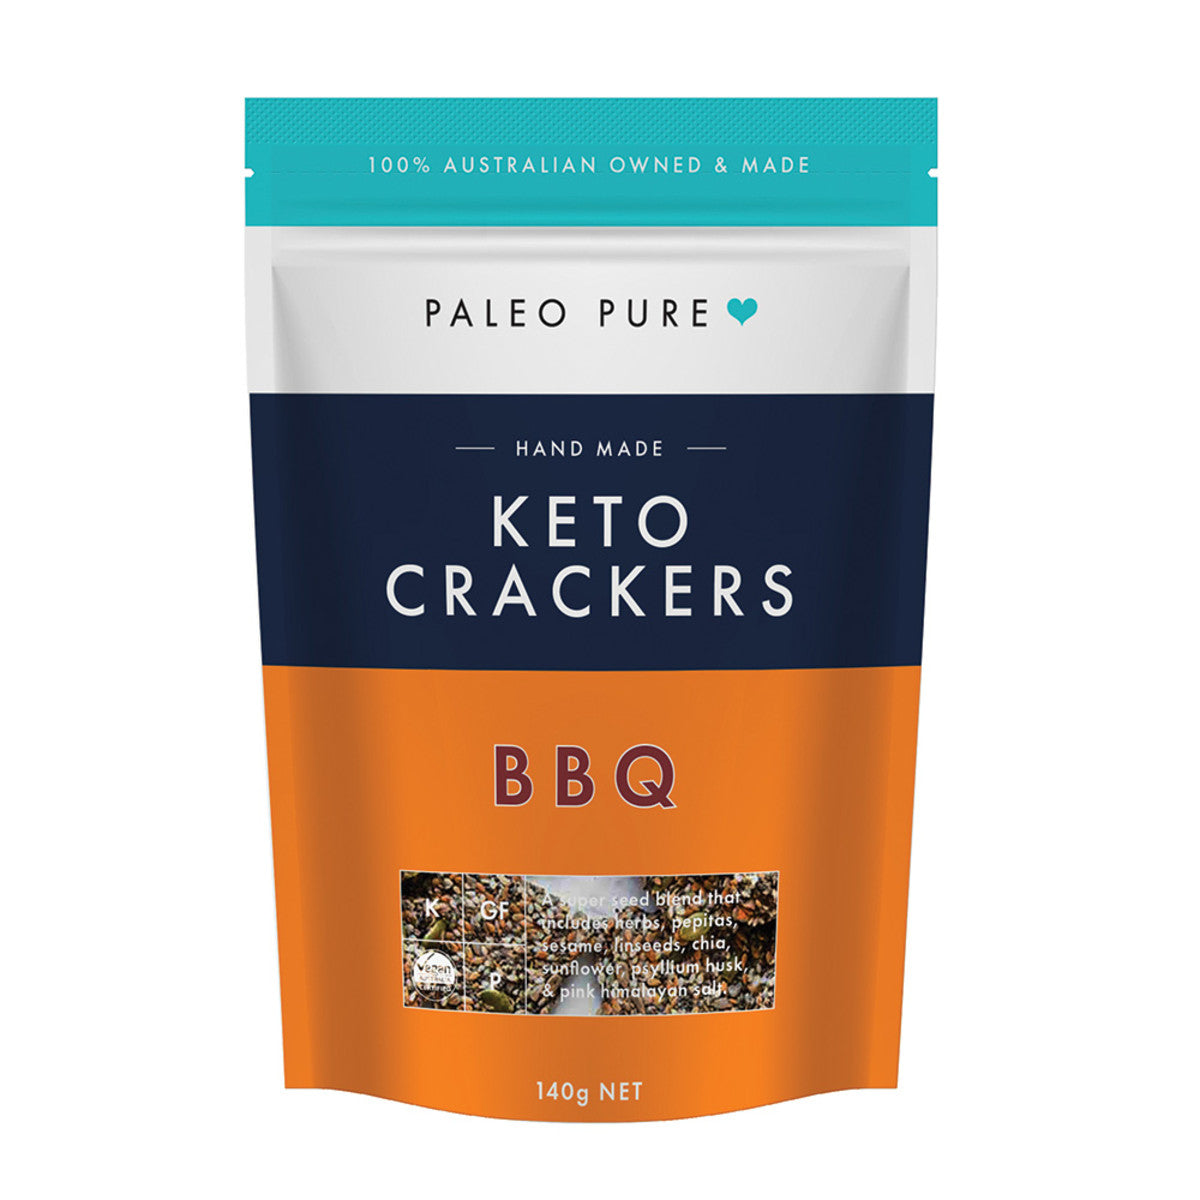 Paleo Pure Keto Crackers 140gm, BBQ Flavour